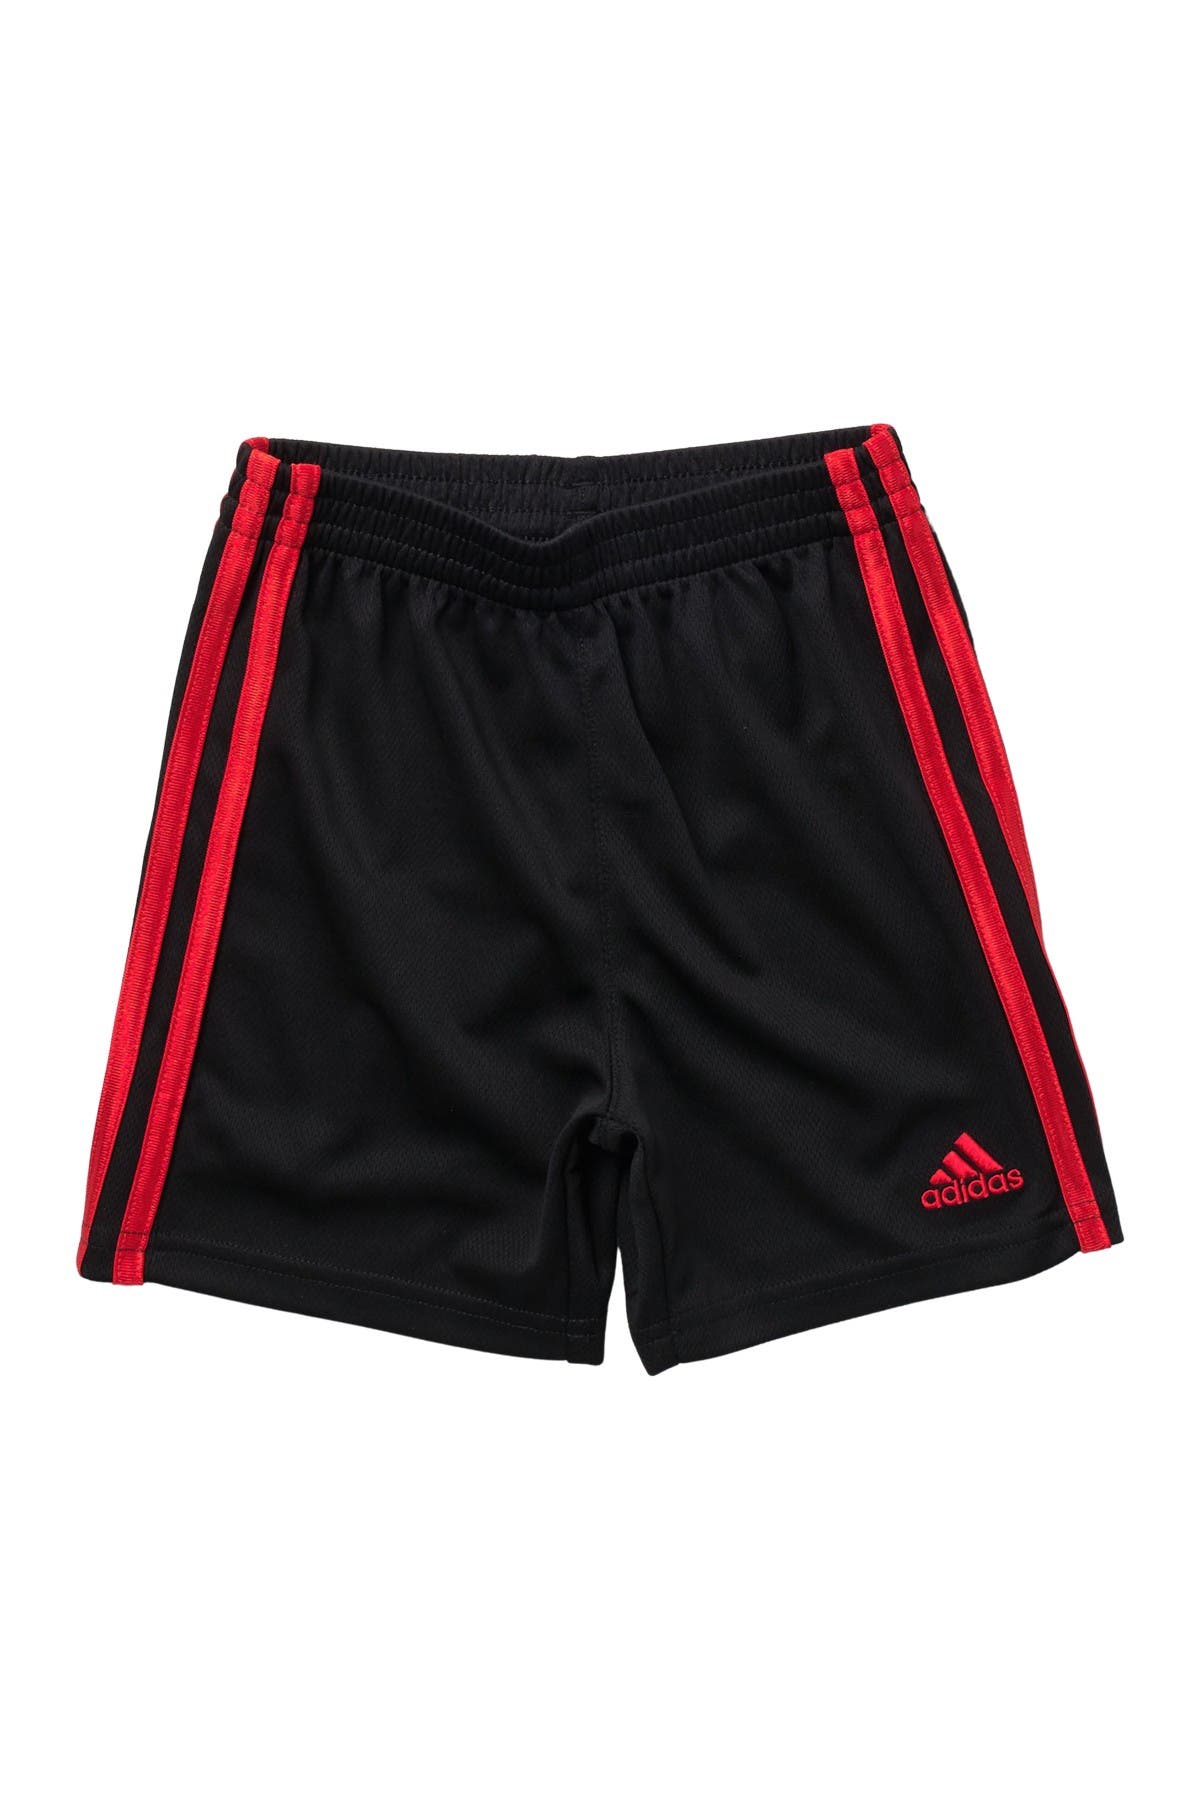 Adidas Originals Kids' 3 Stripe Mesh Shorts In Black/red